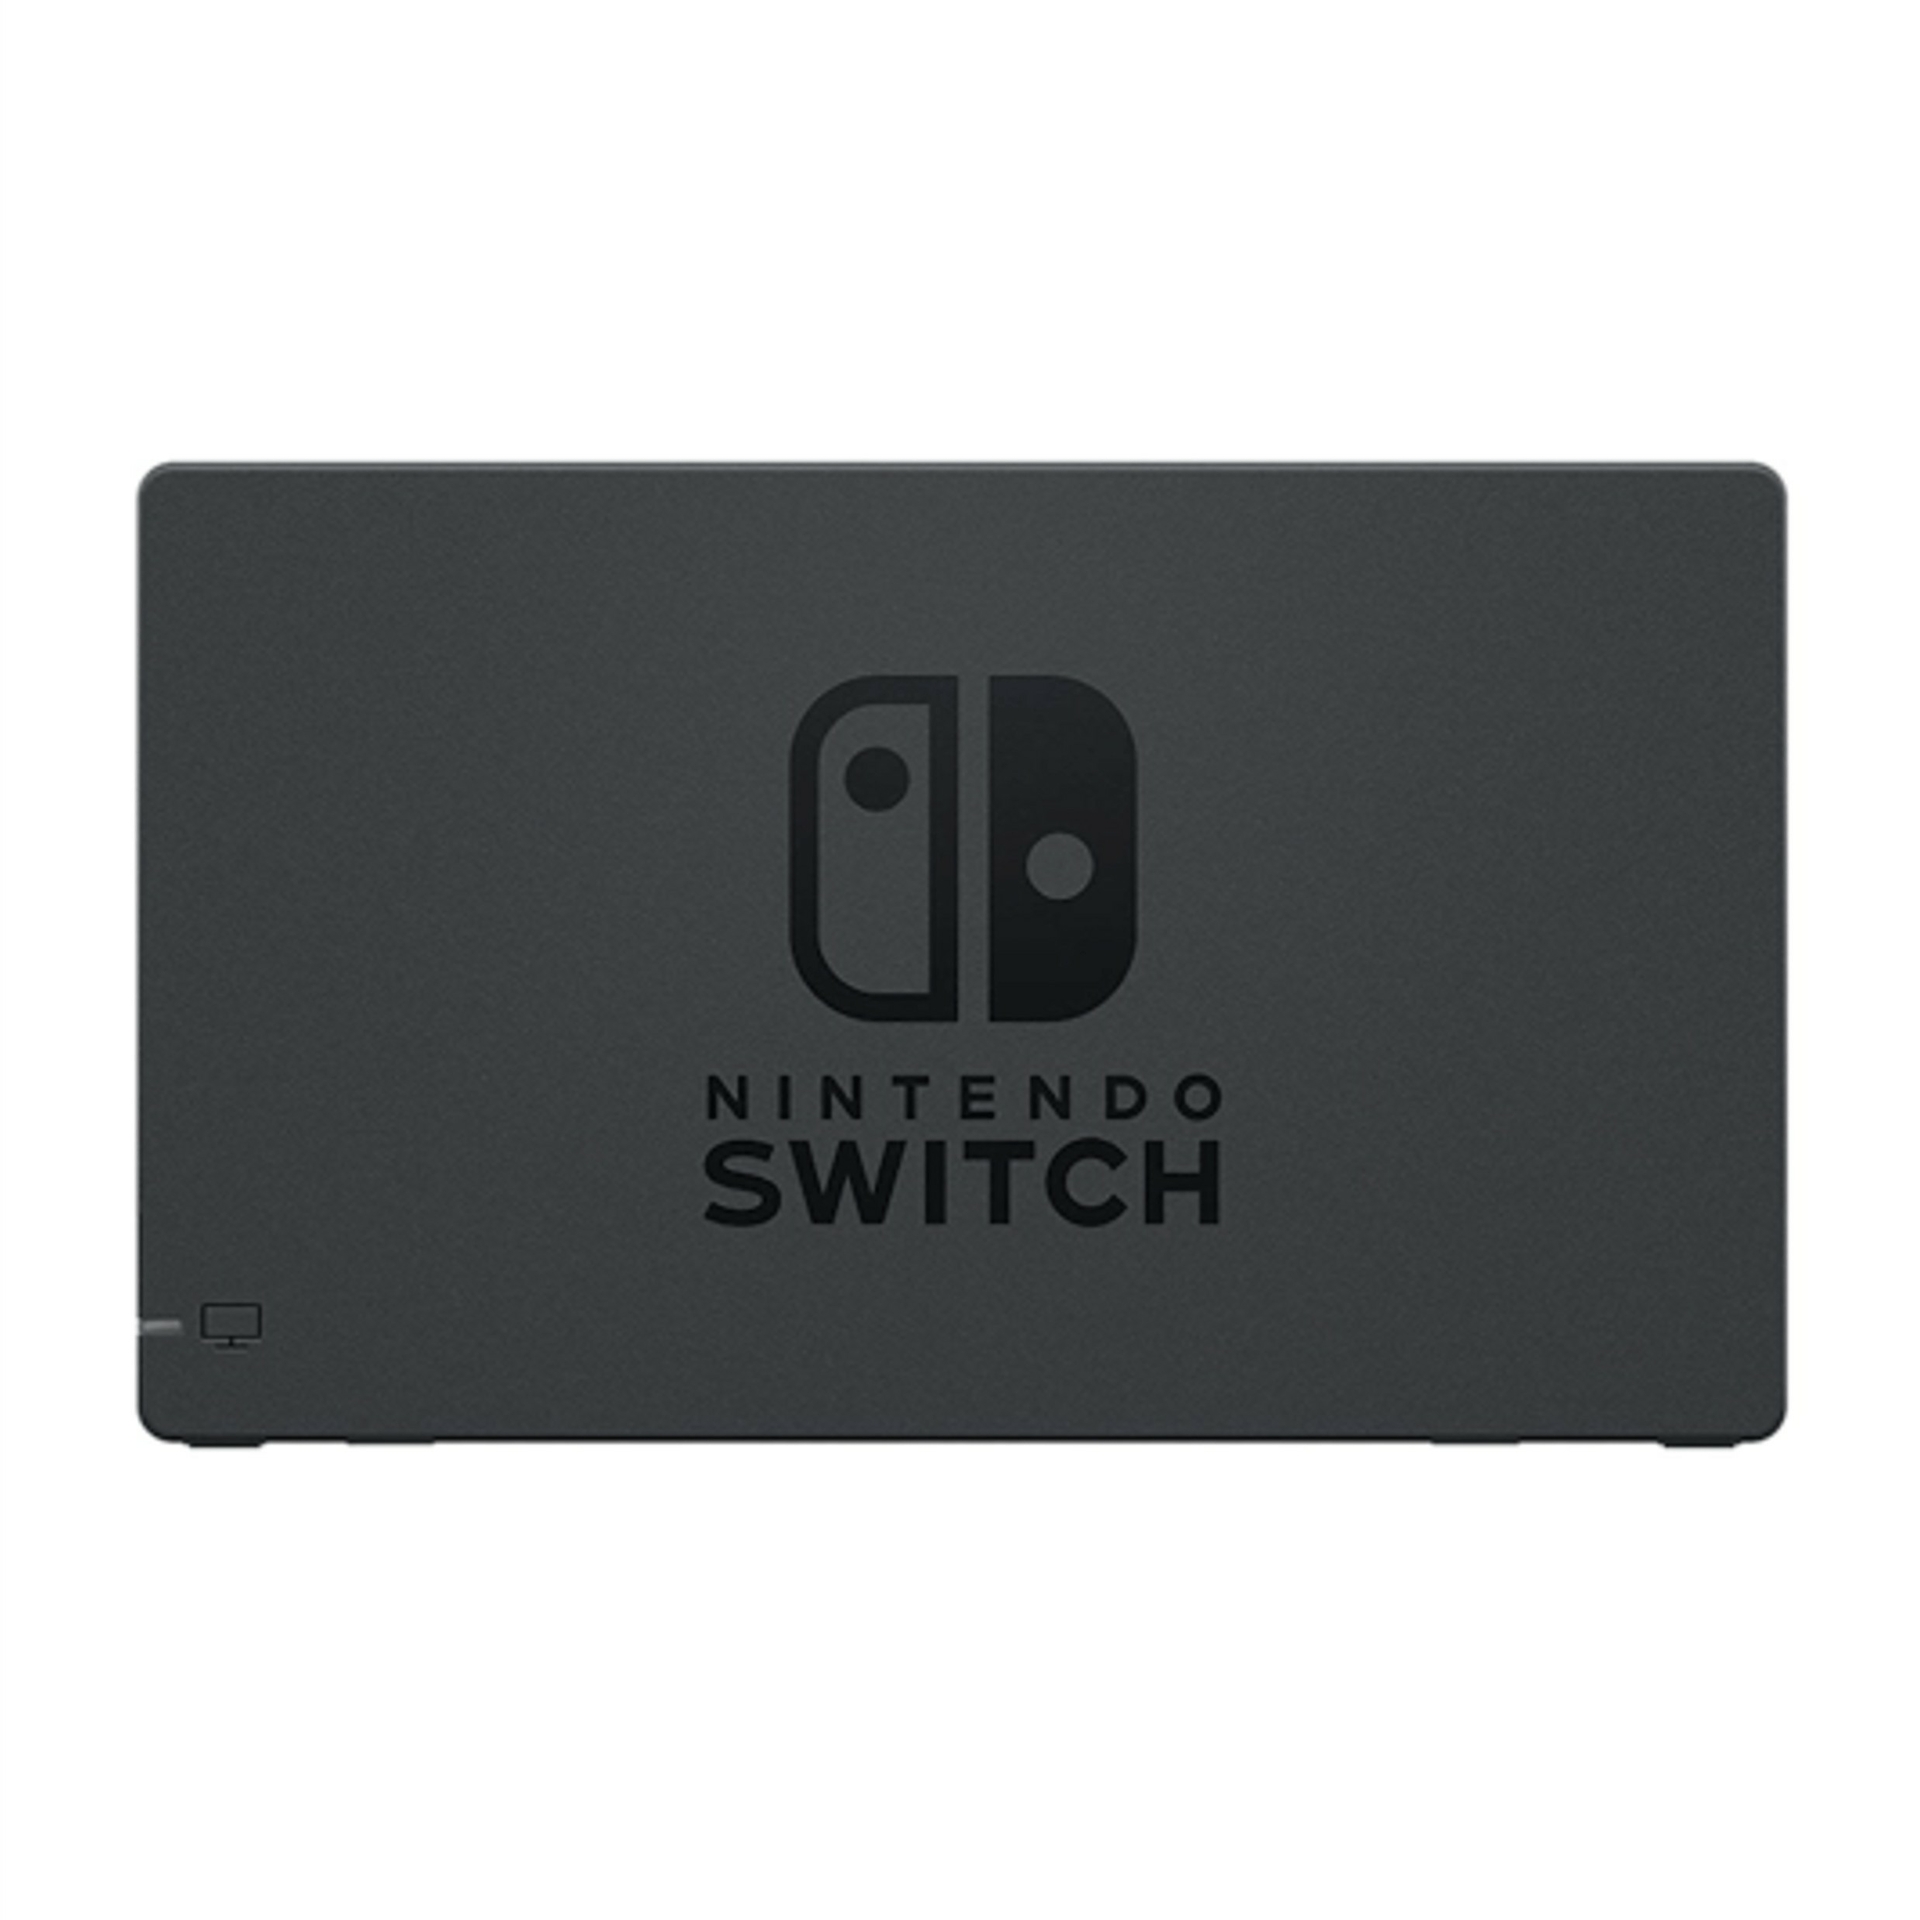 Nintendo Switch Dock (Los) - Nintendo Switch Hardware